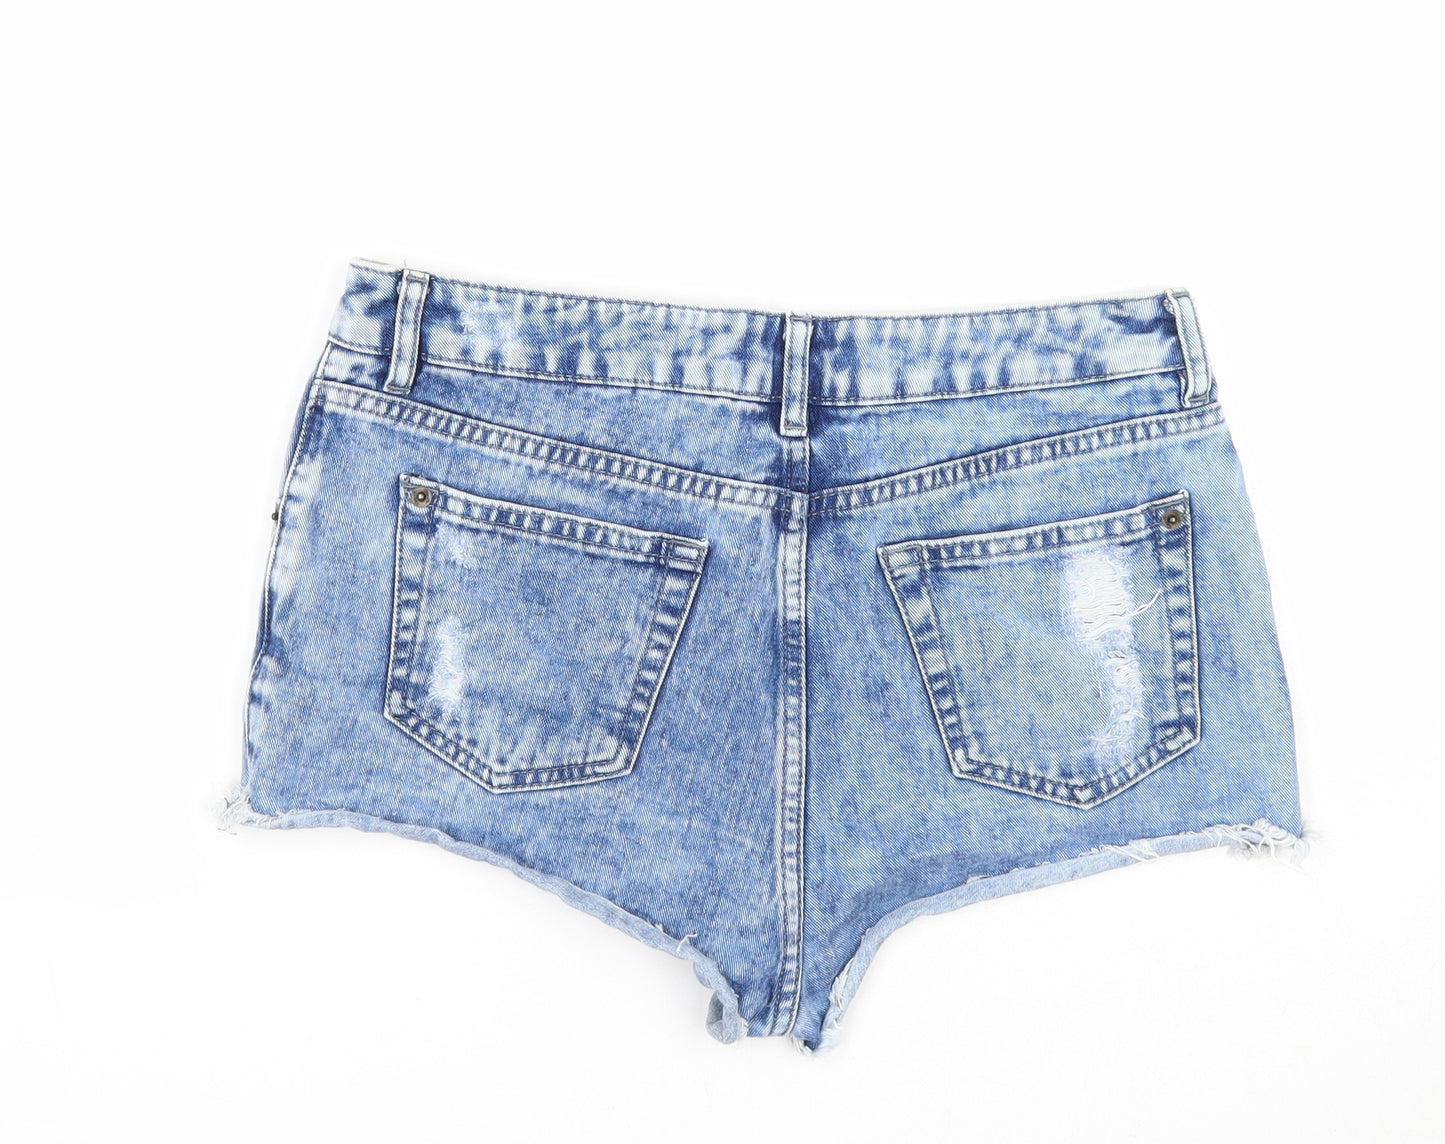 Miss Selfridge Womens Blue Cotton Hot Pants Shorts Size 12 Regular Zip - Distressed